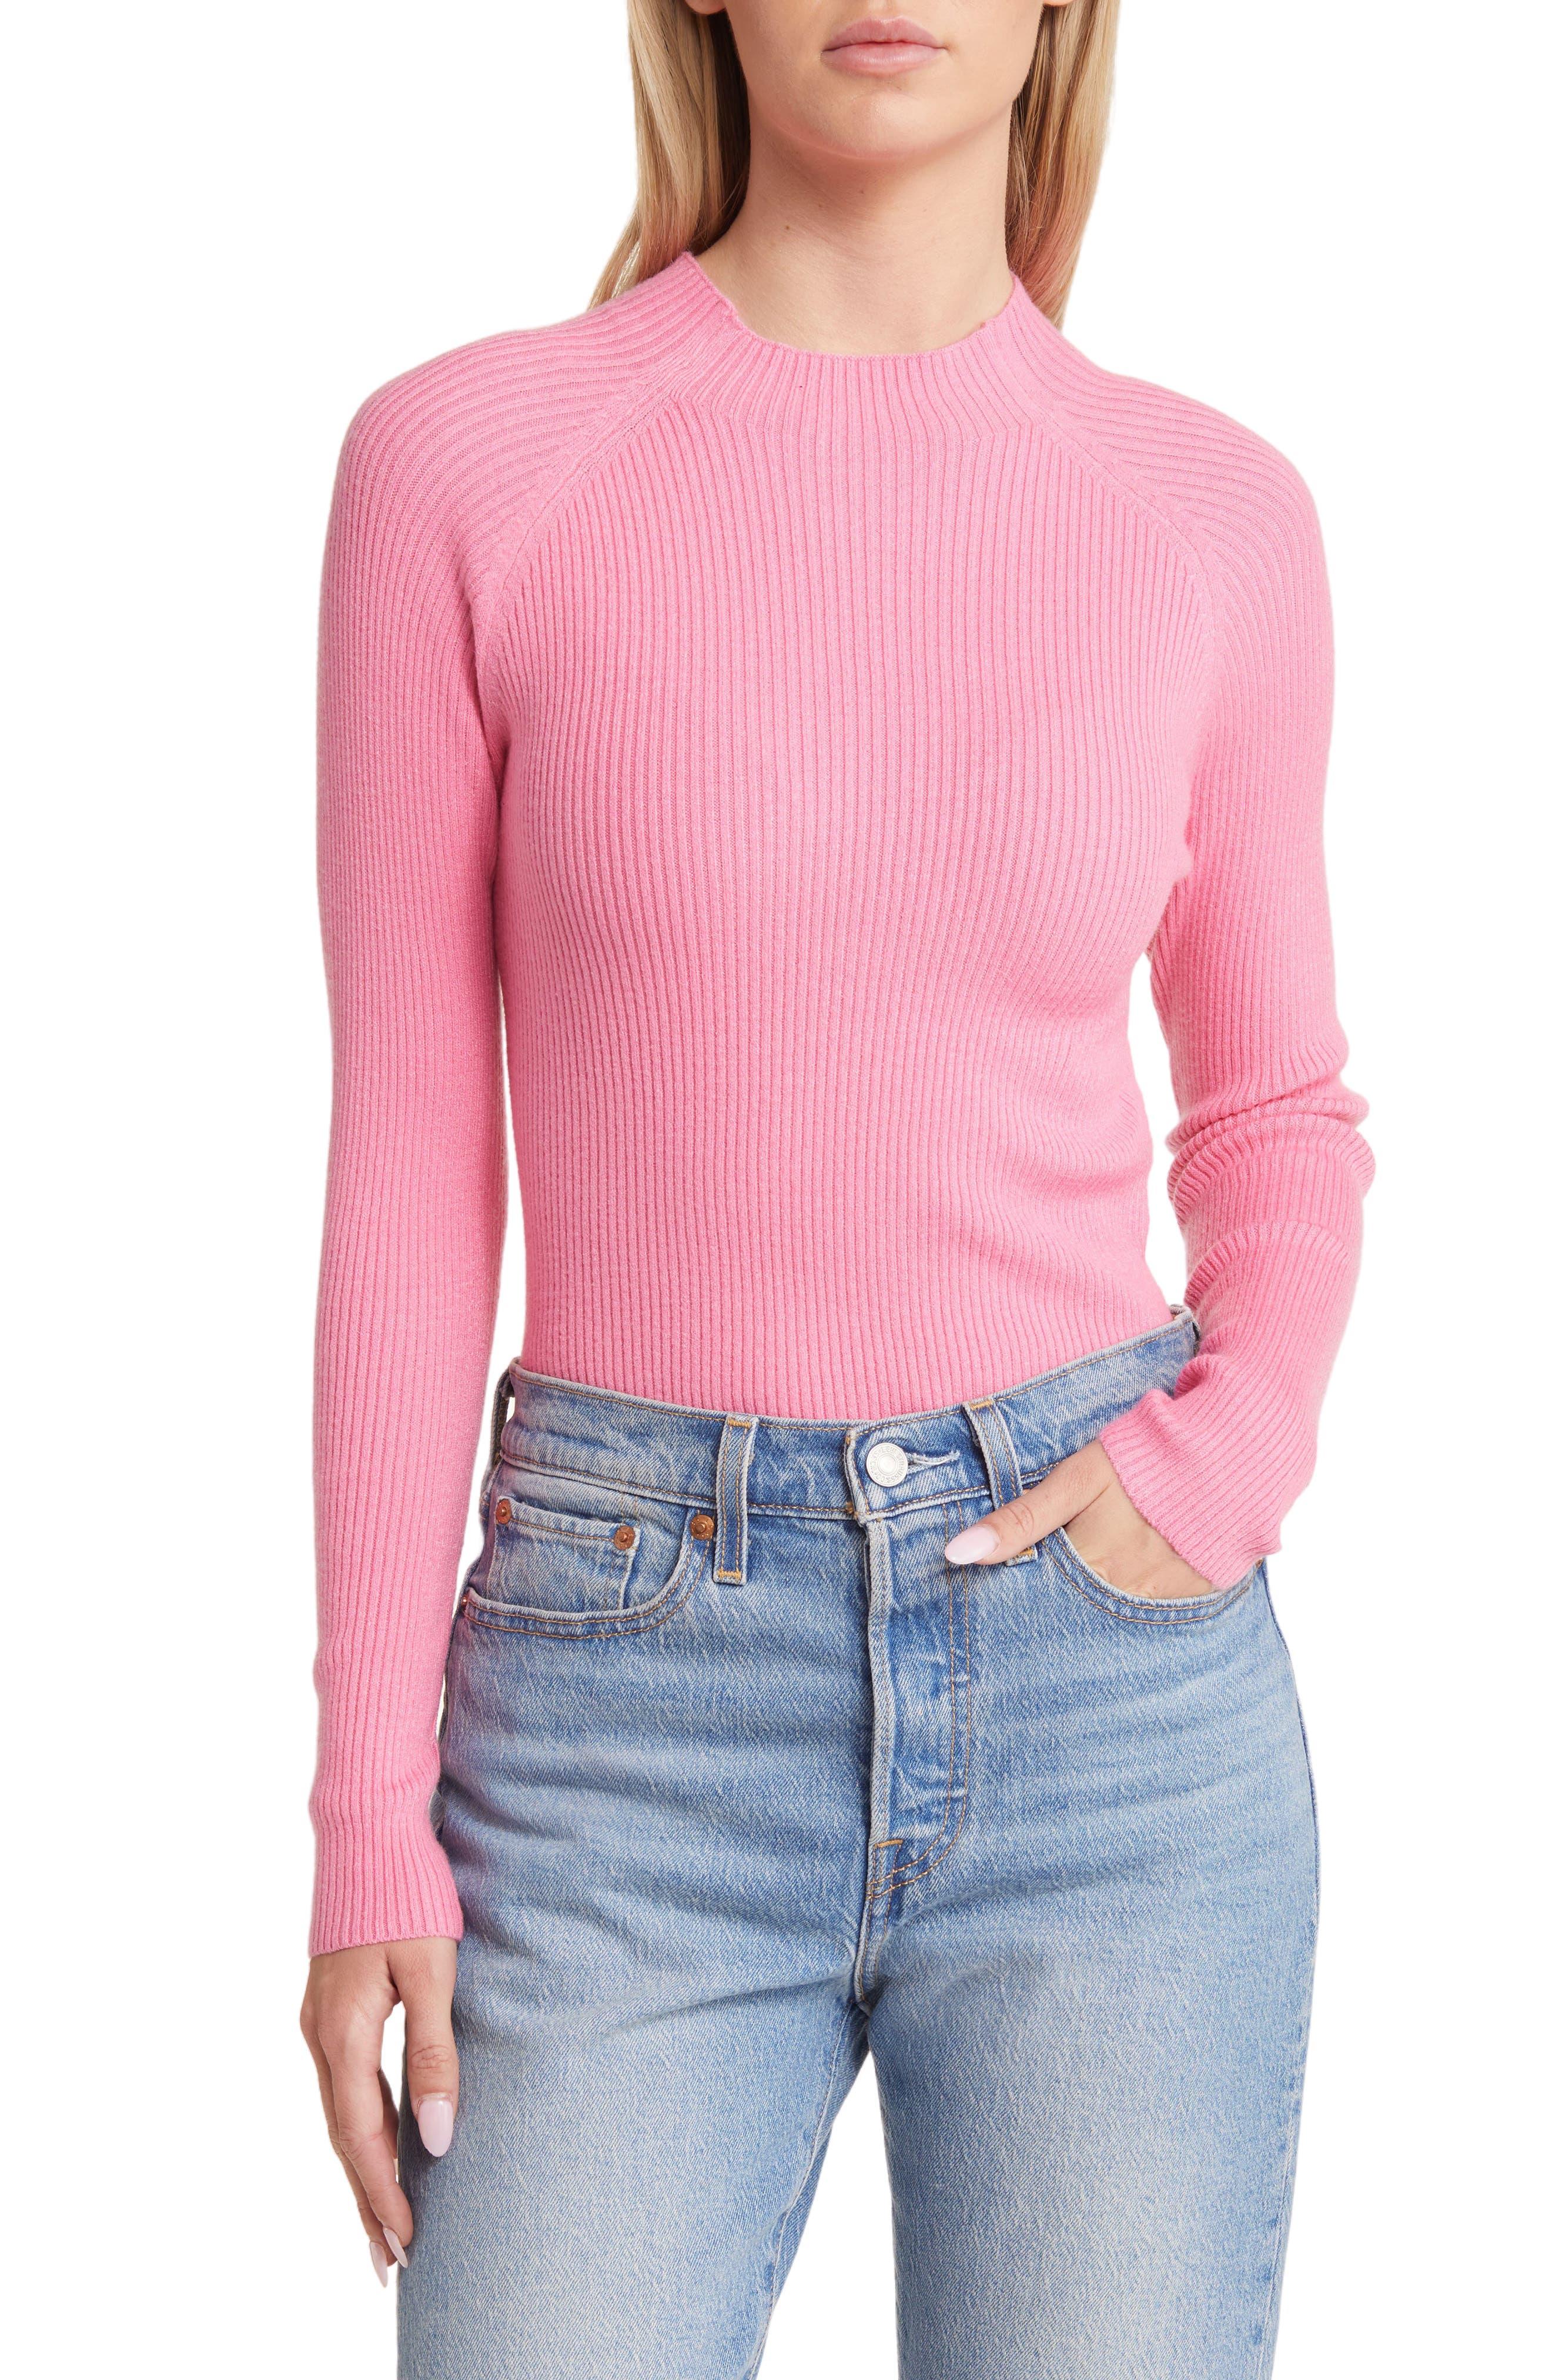 Vero Moda Evie Mock Neck Rib Top in Pink | Lyst